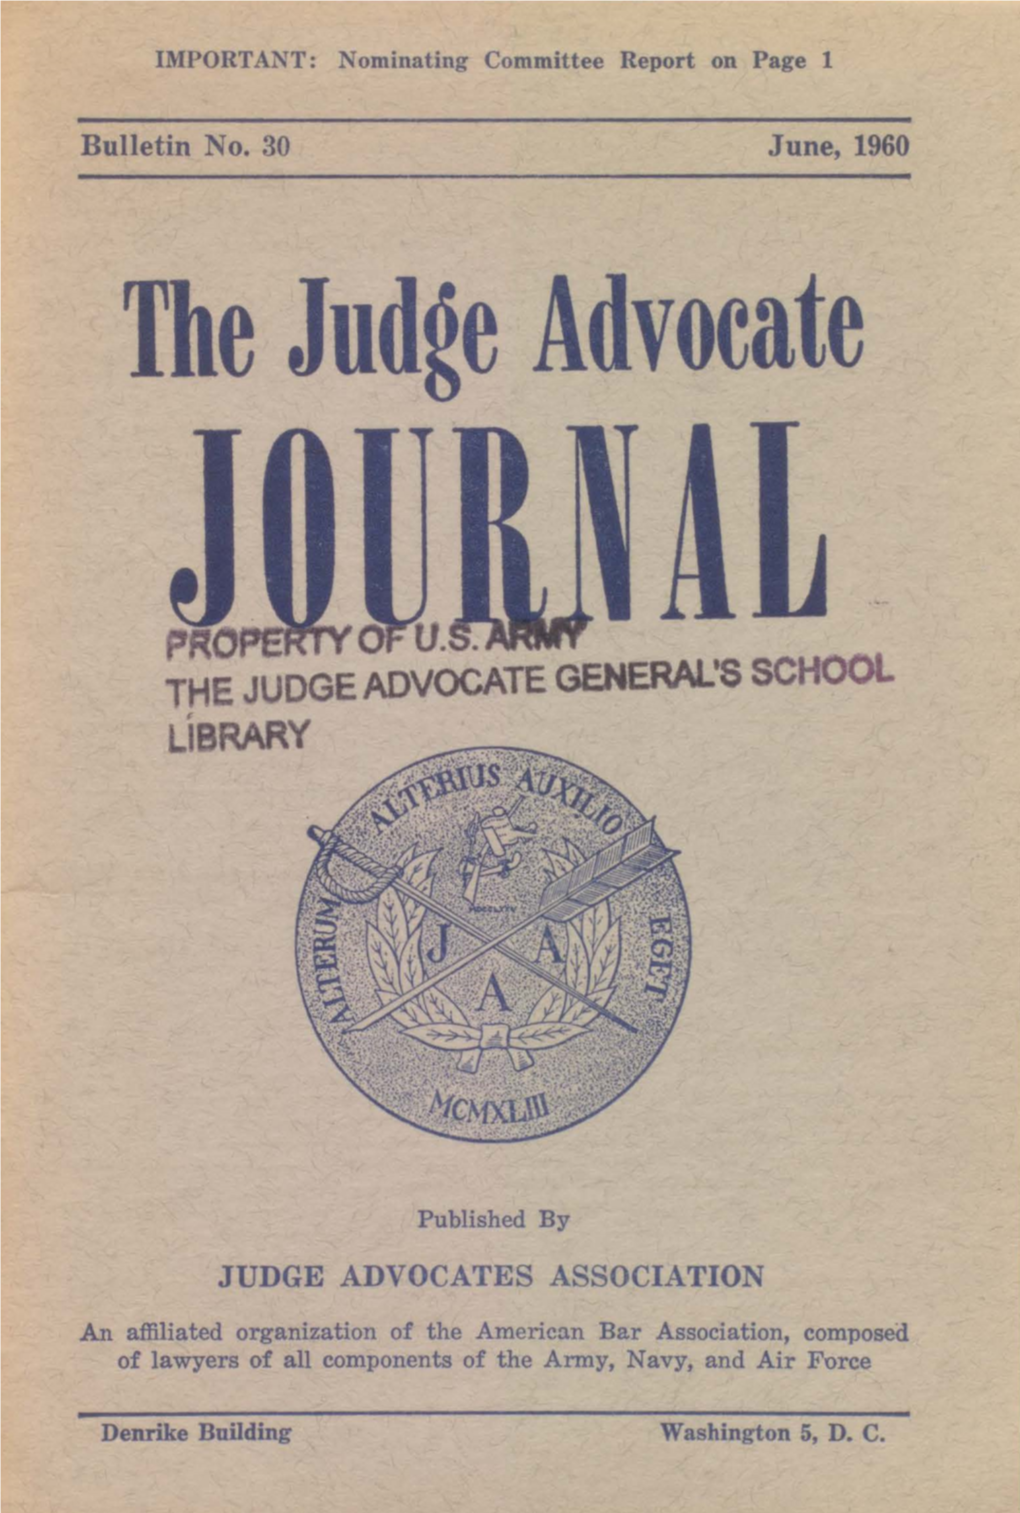 The Judge Advocate Journal, Bulletin No. 30, June, 1960